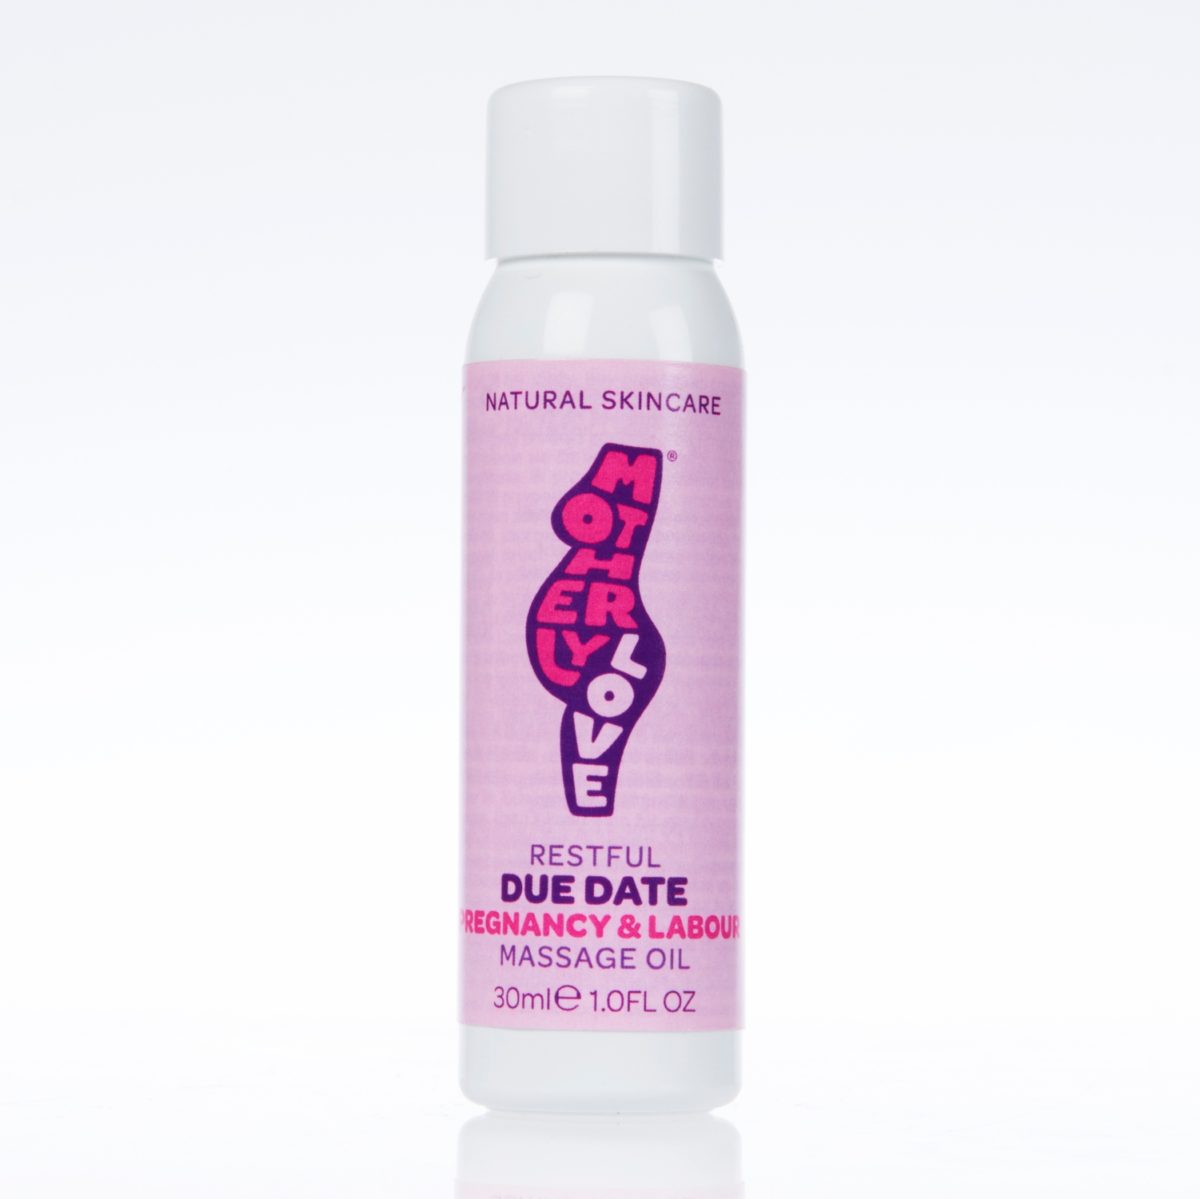 Due Date Pregnancy and Labour Massage Oil